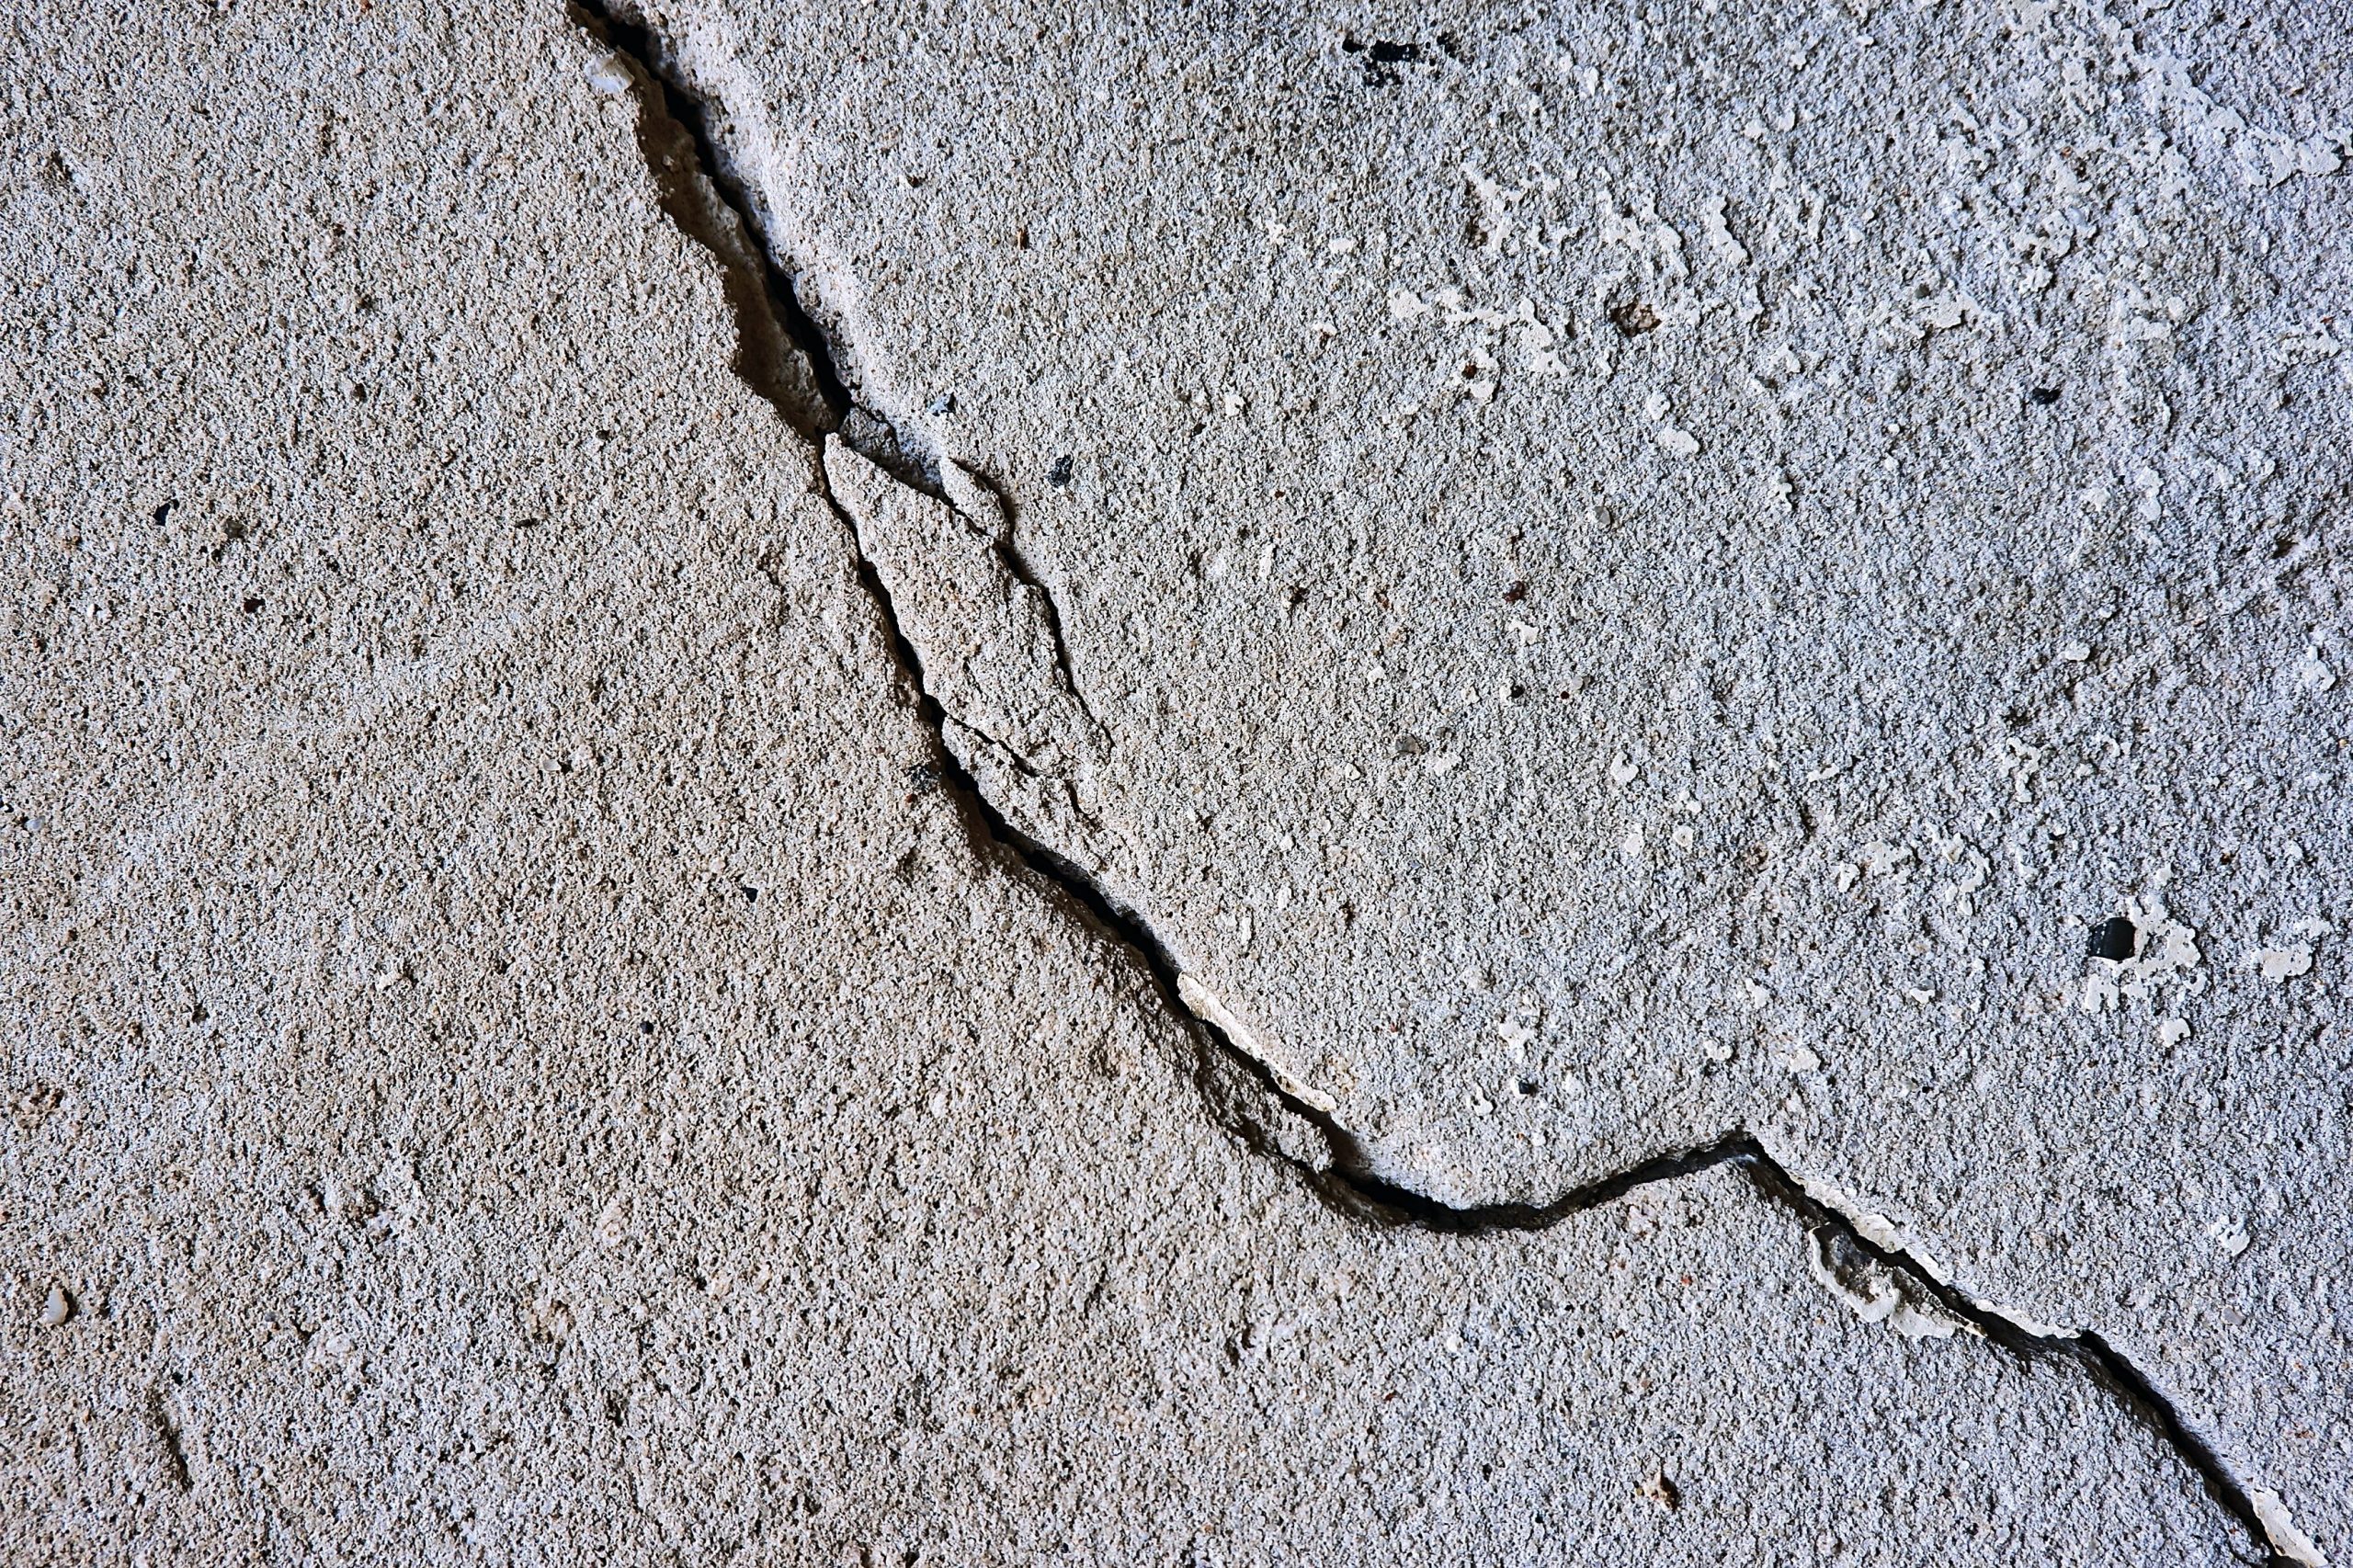 Glitch or intern? US Geological Survey sends out false earthquake alert